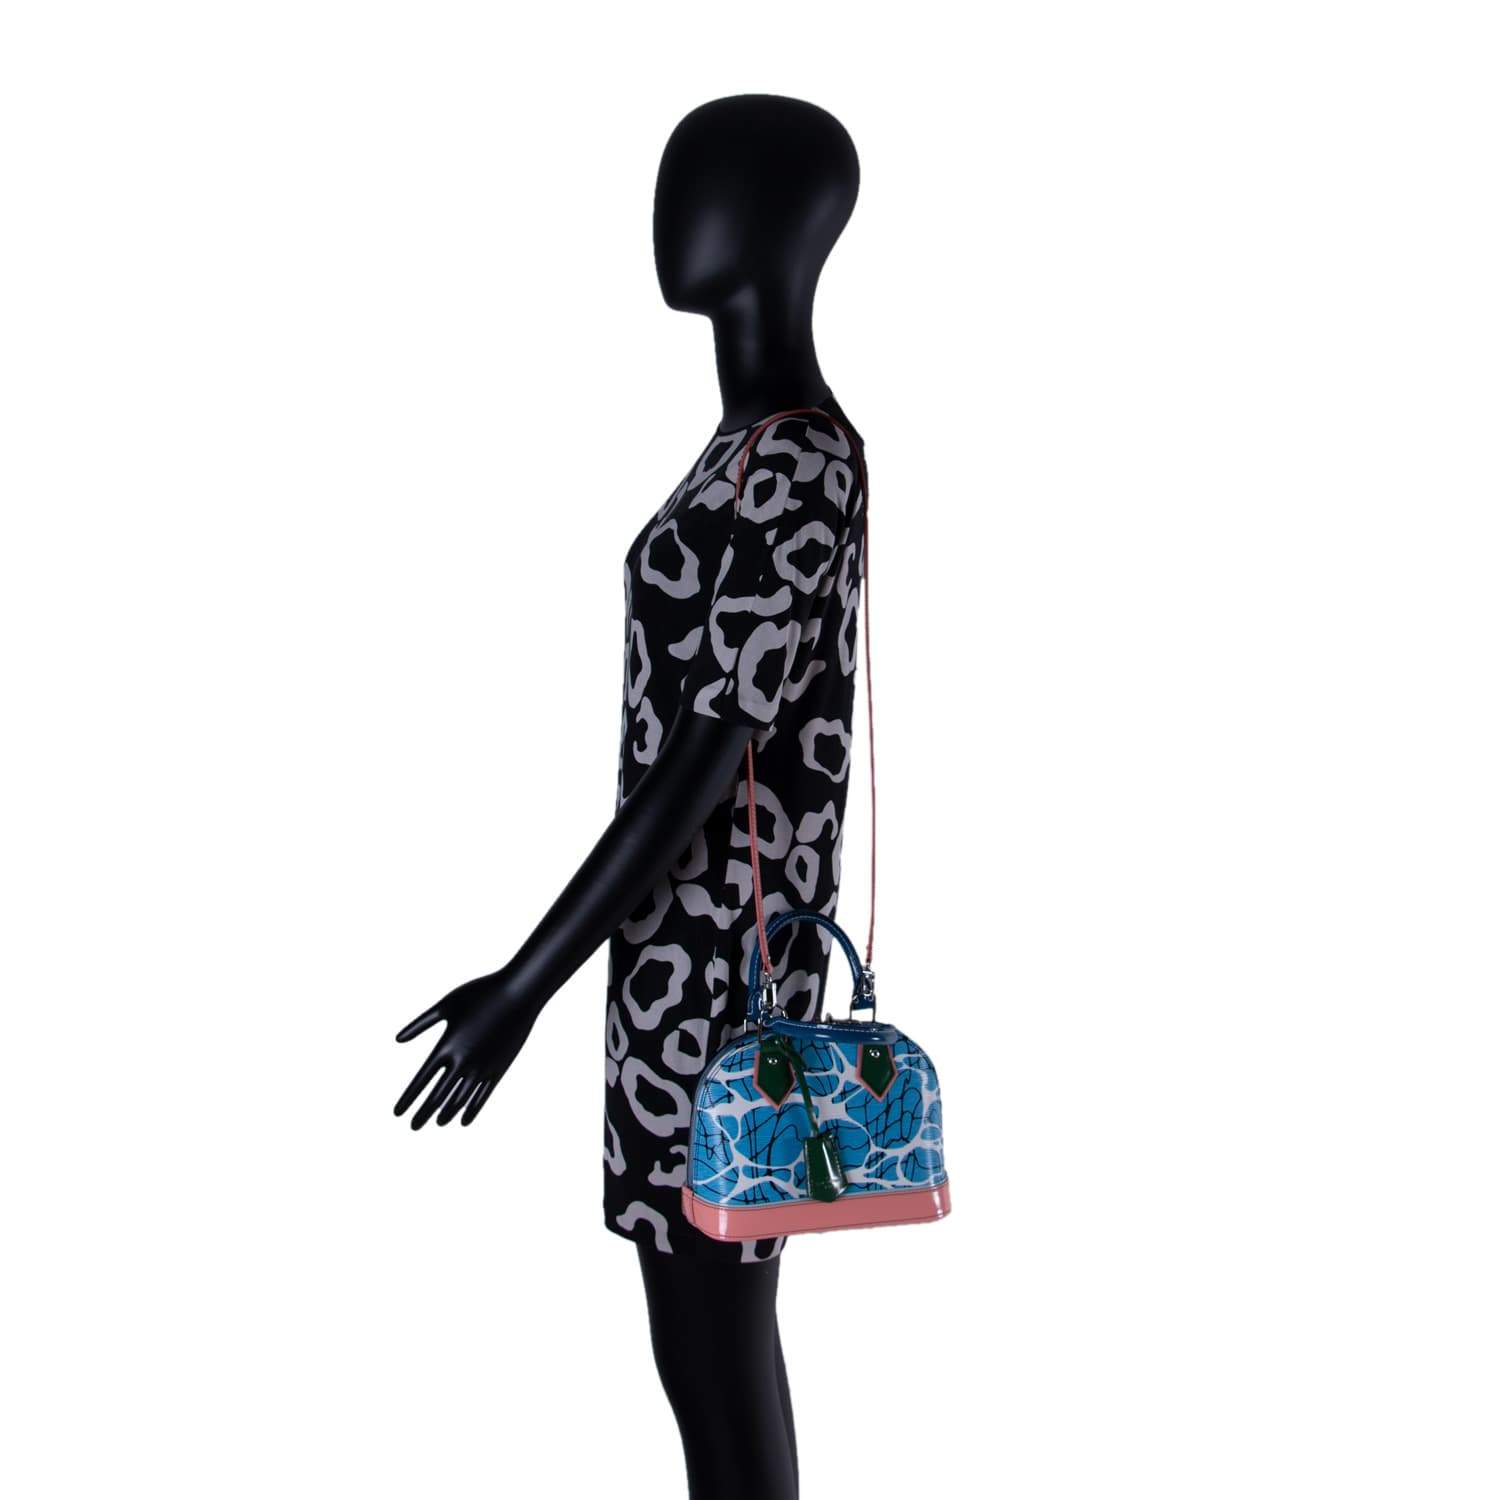 Louis Vuitton Alma Limited Edition Handbag